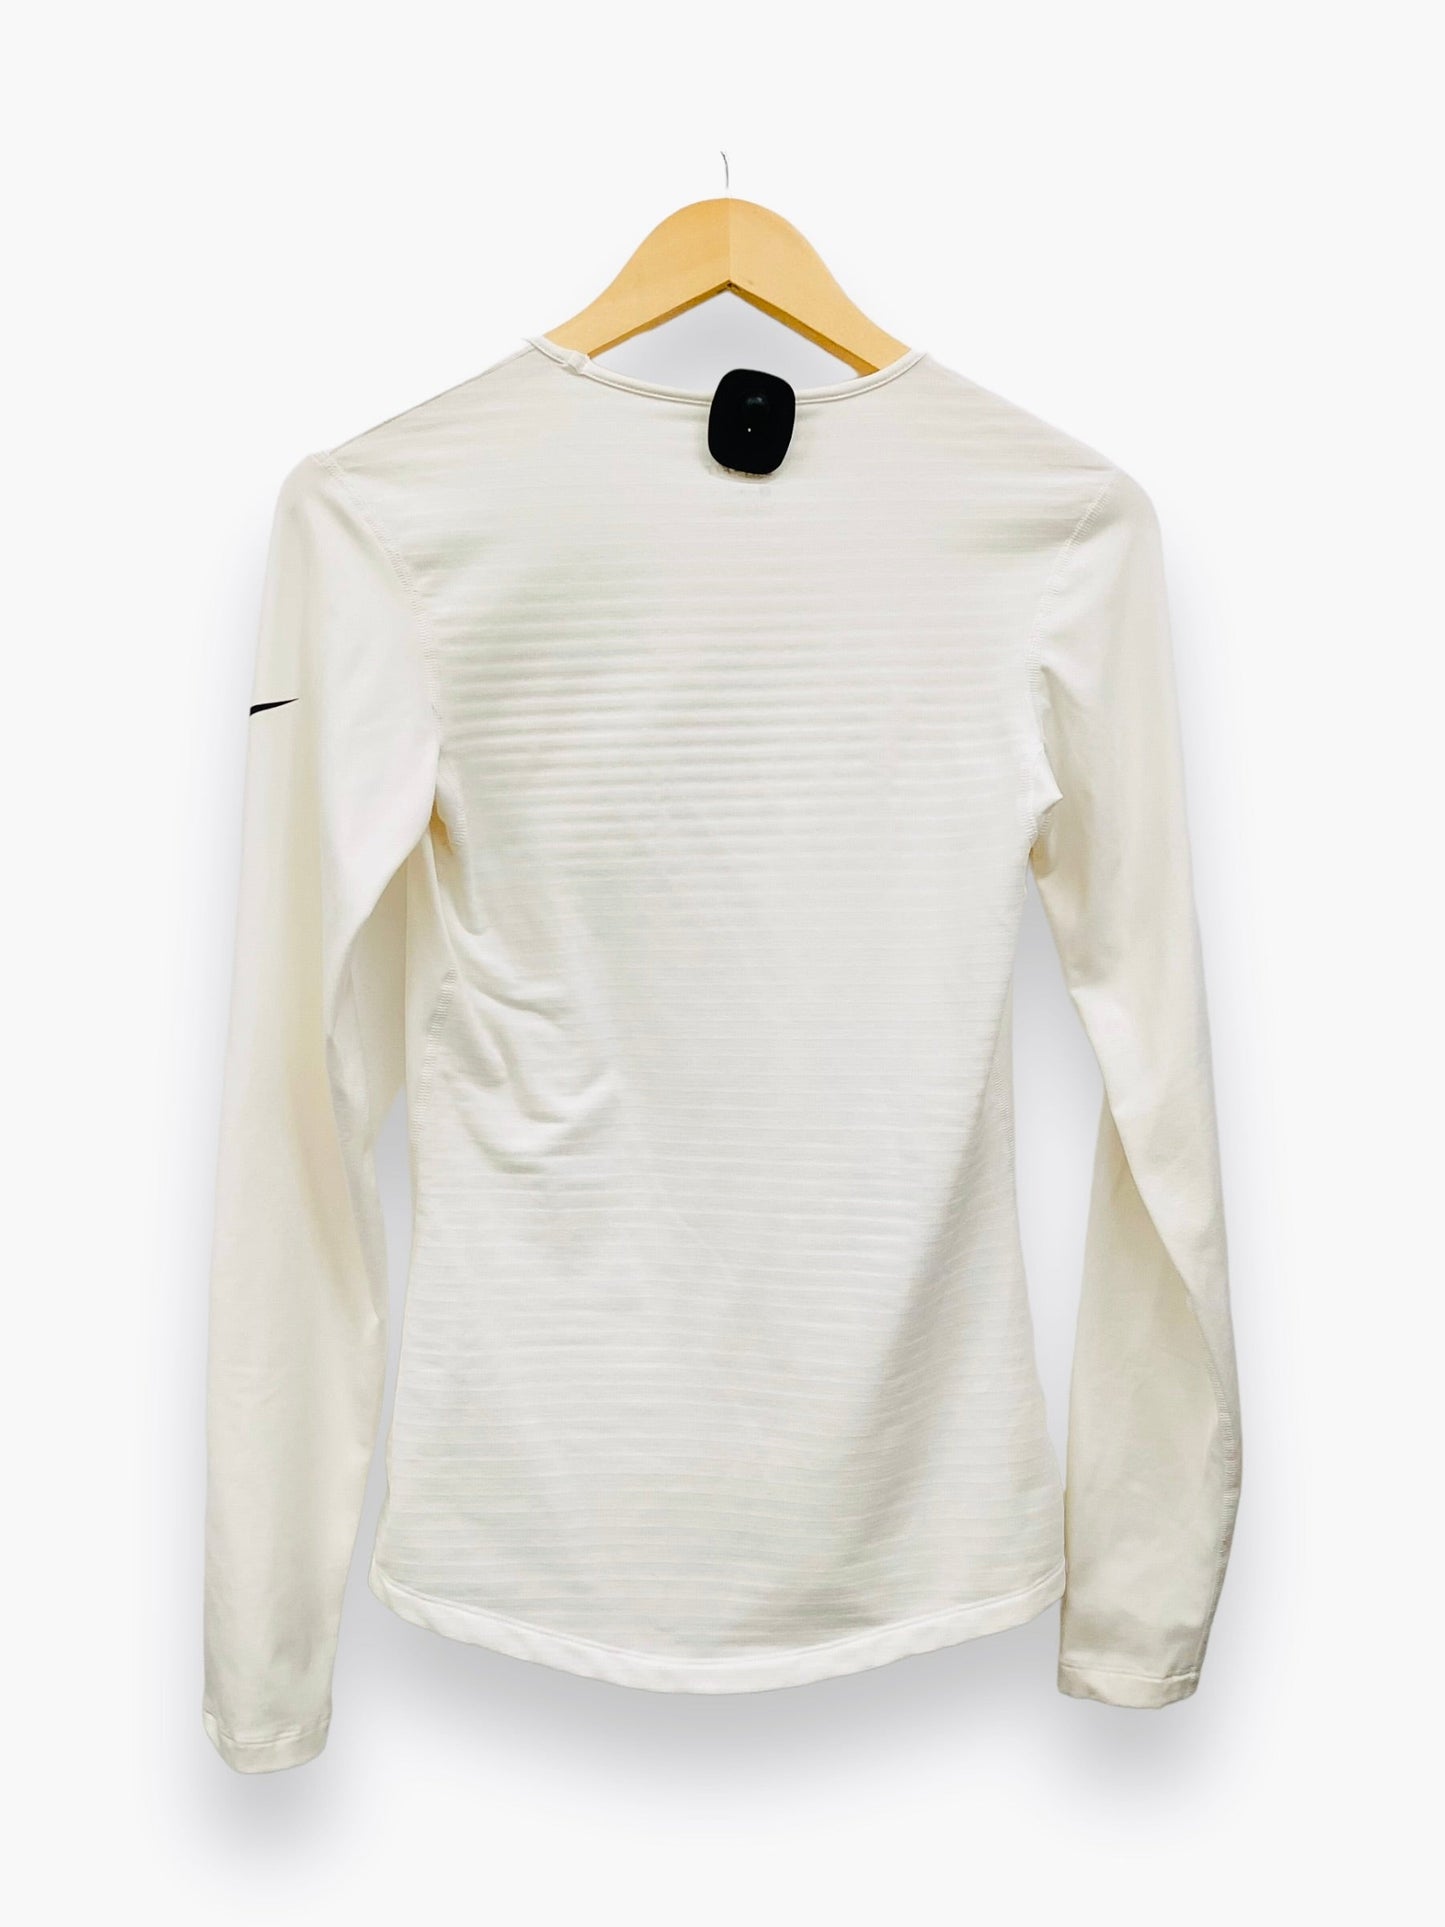 Cream Athletic Top Long Sleeve Crewneck Nike, Size M